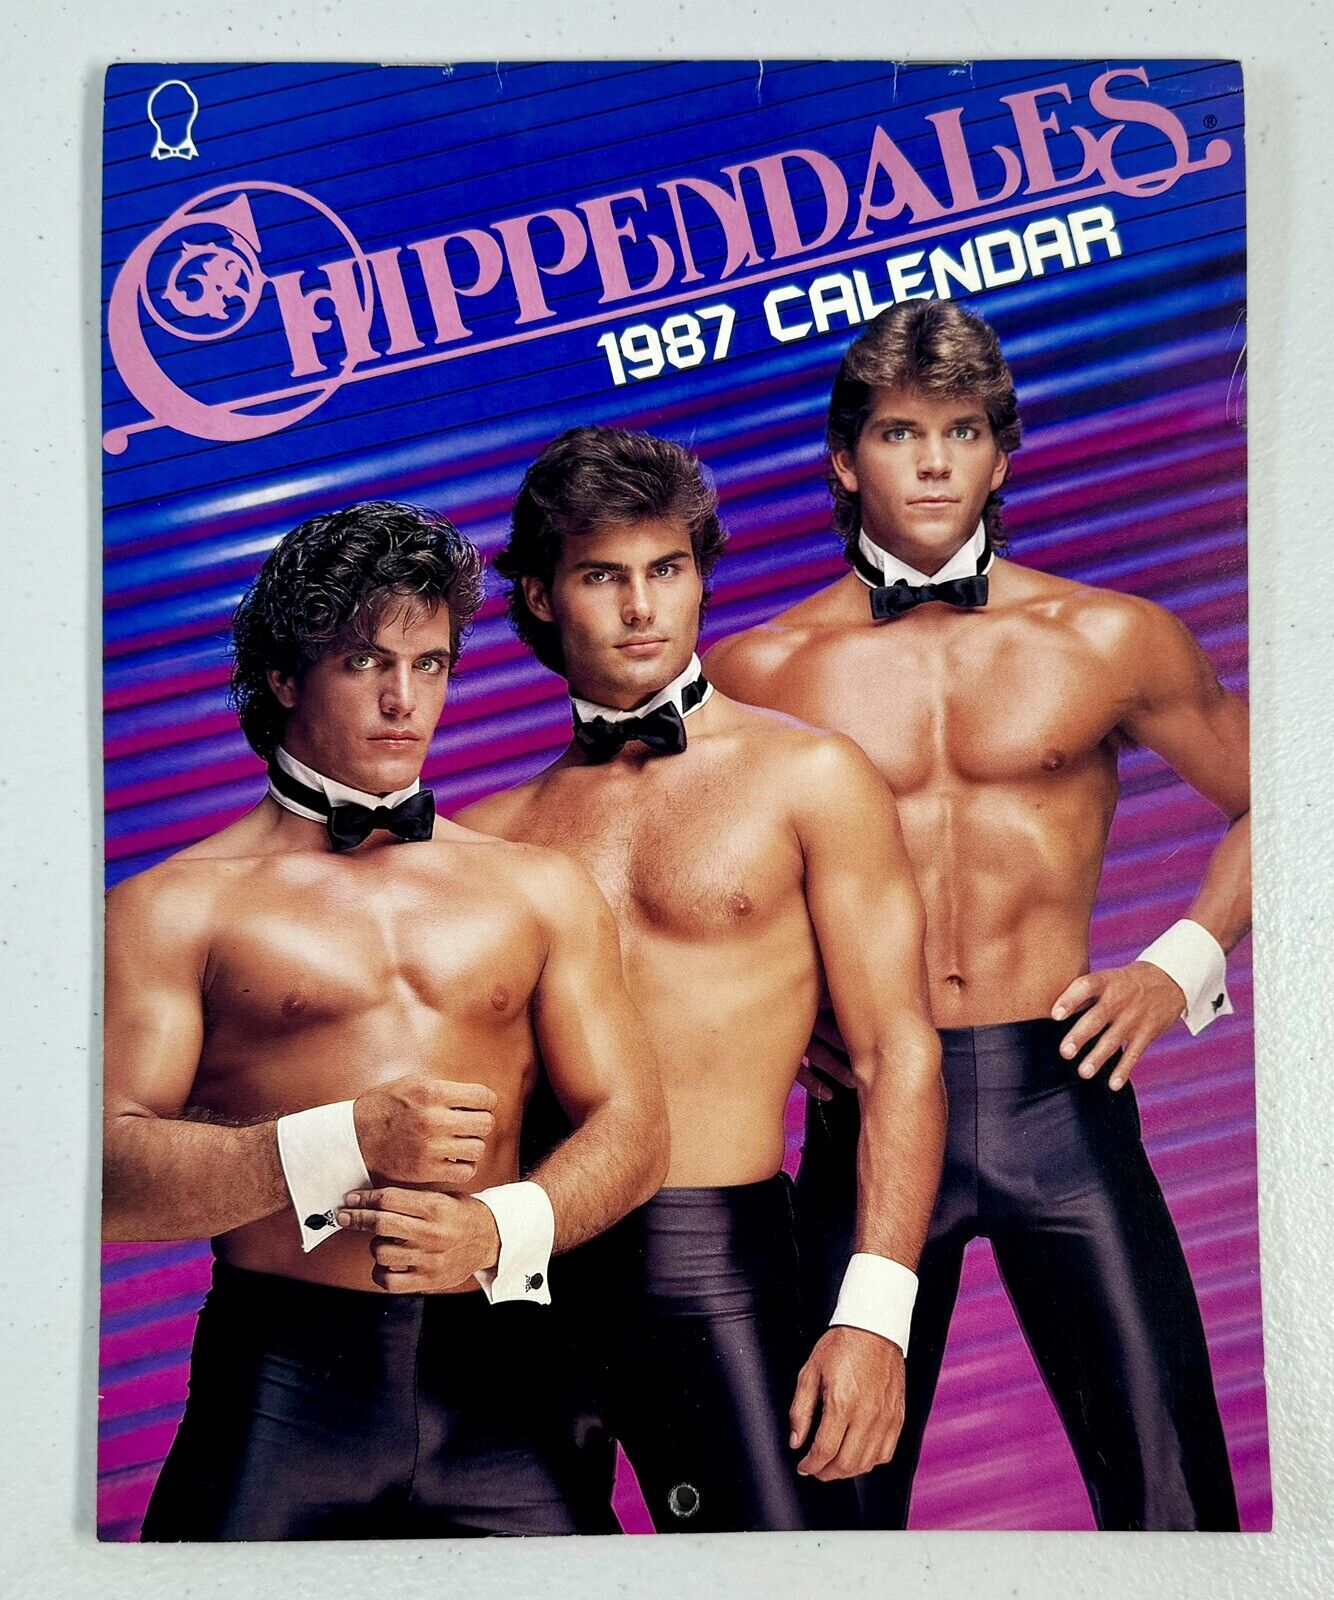 *MINT* Vintage 1987 Chippendales Calendar Men Strippers